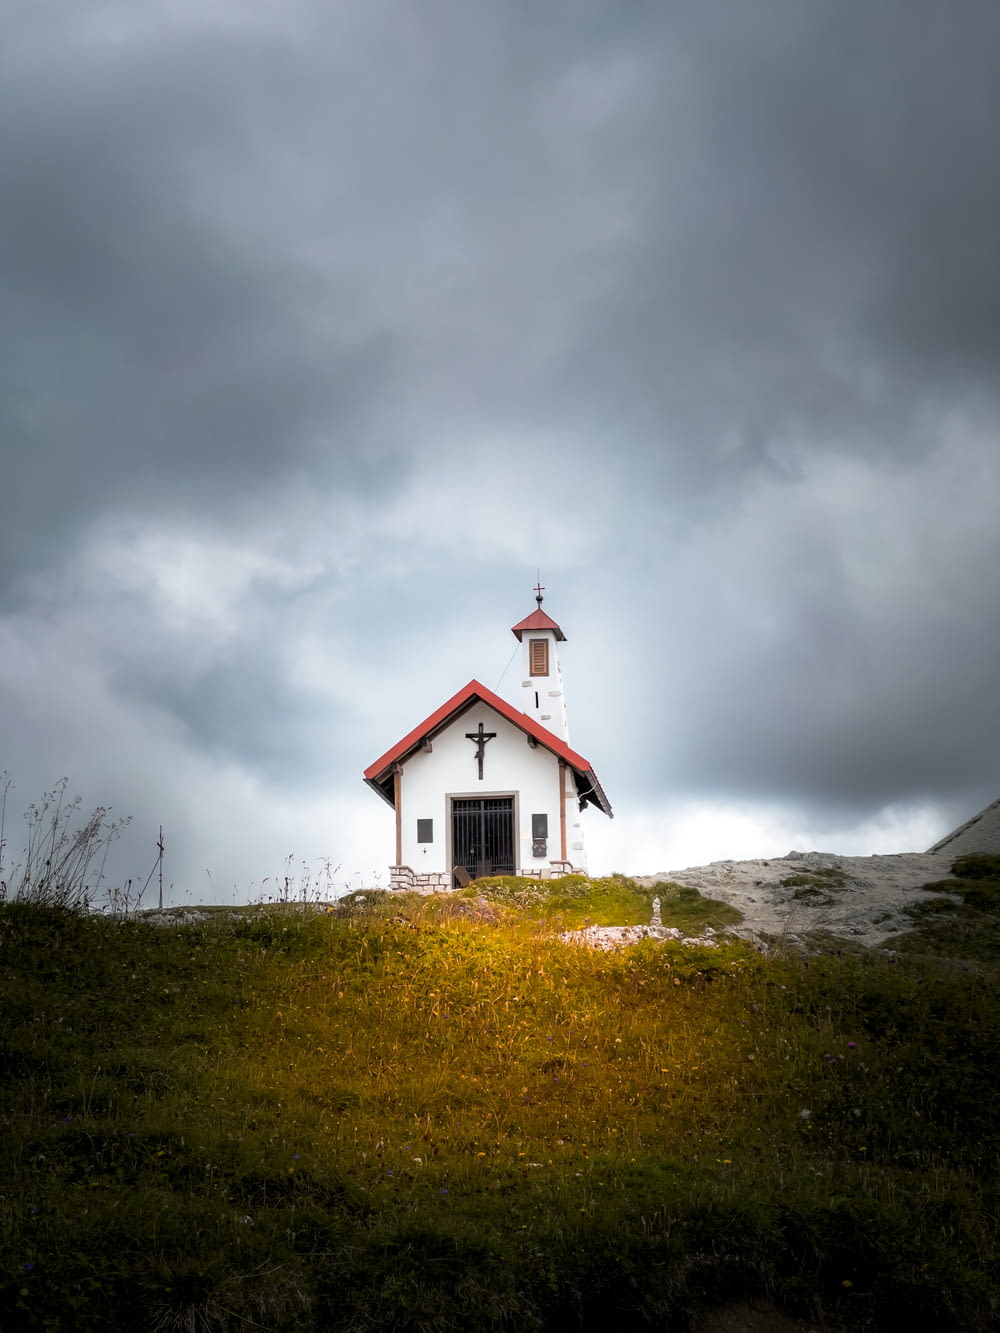 a small church on a hill under a cloudy sky